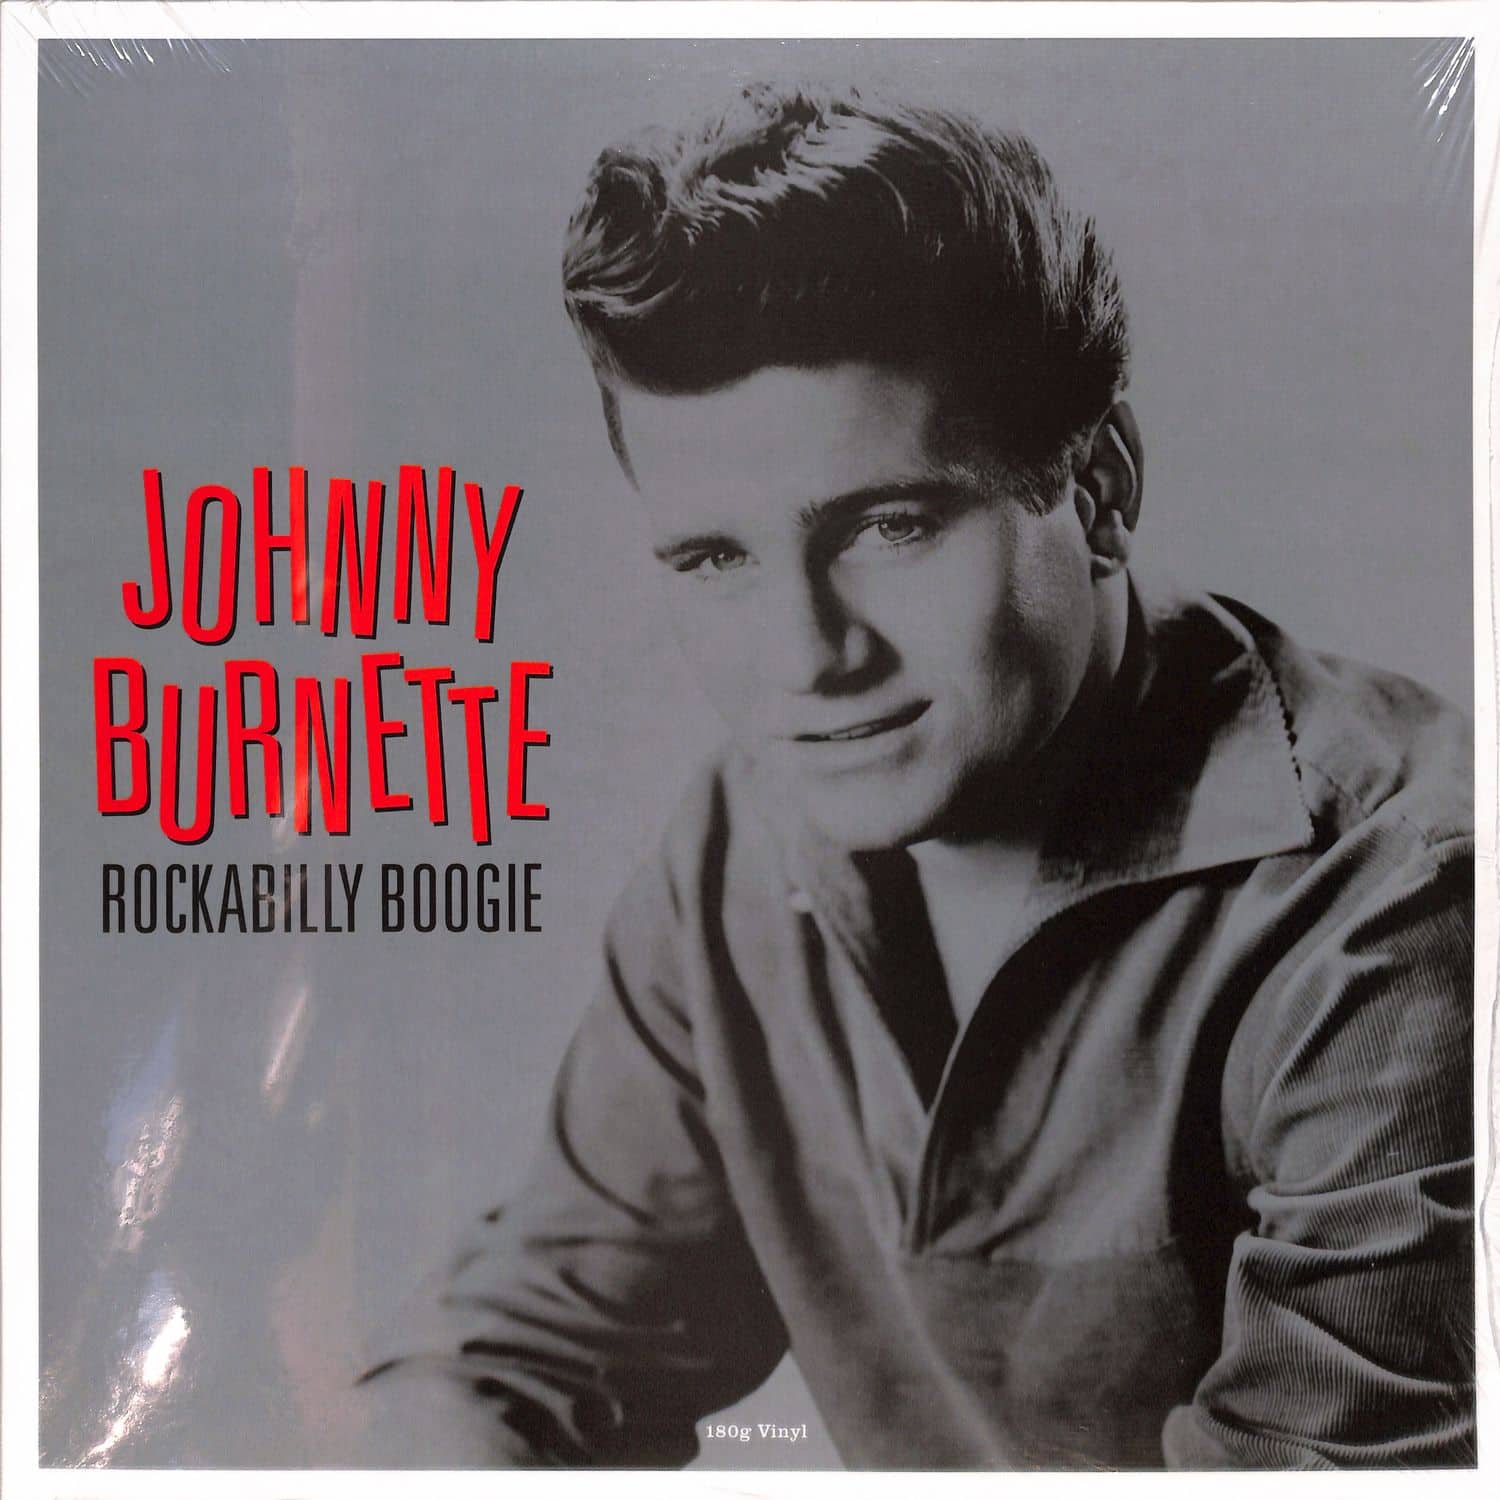 Johnny Burnette - ROCKABILLY BOOGIE 